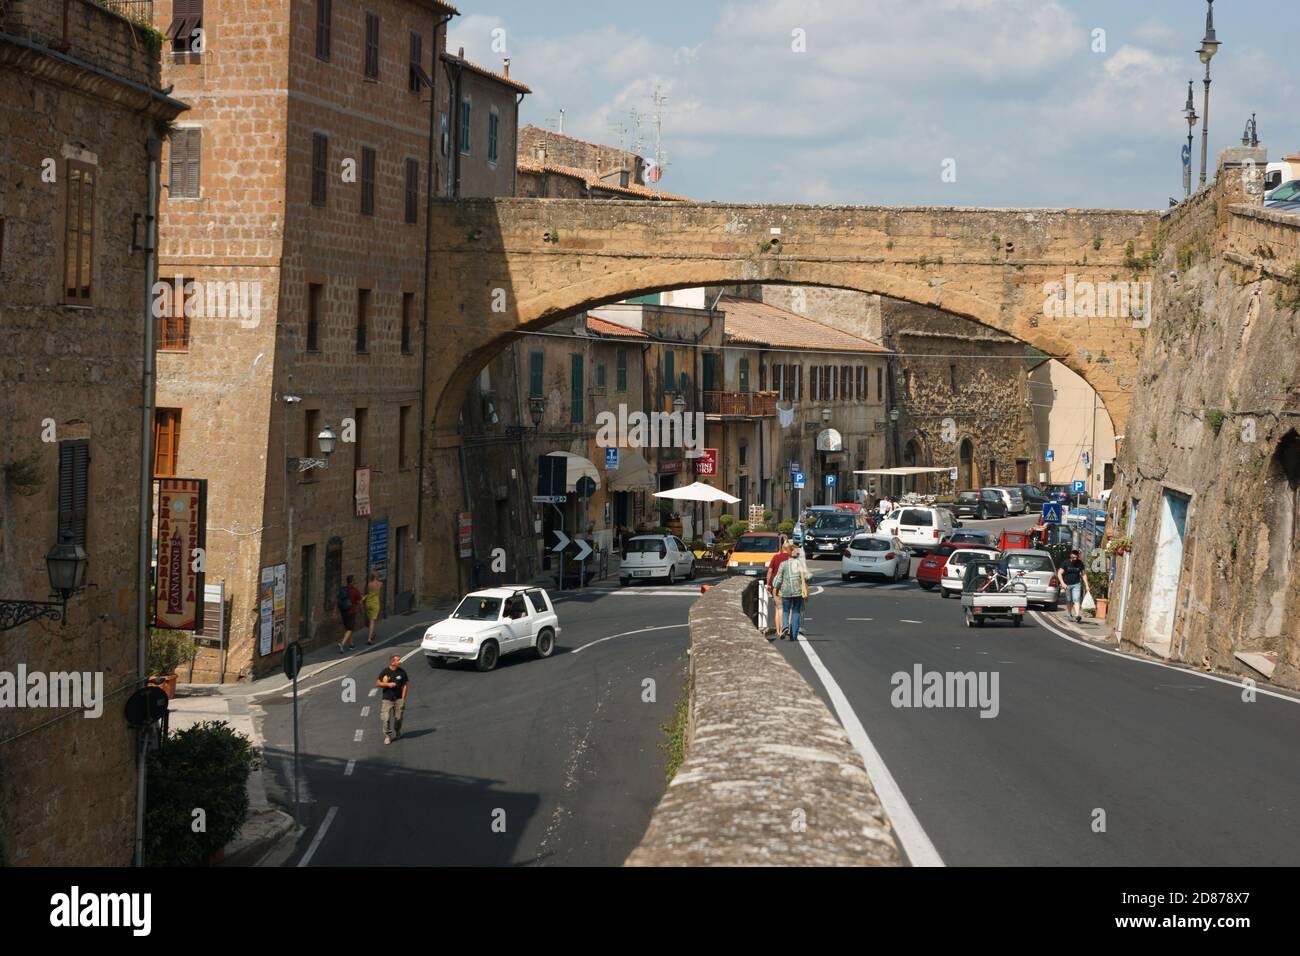 Calle en la antigua ciudad turística histórica de Pitigliano. Pitigliano, provincia de Grosseto, Italia, Toscana. Foto de stock